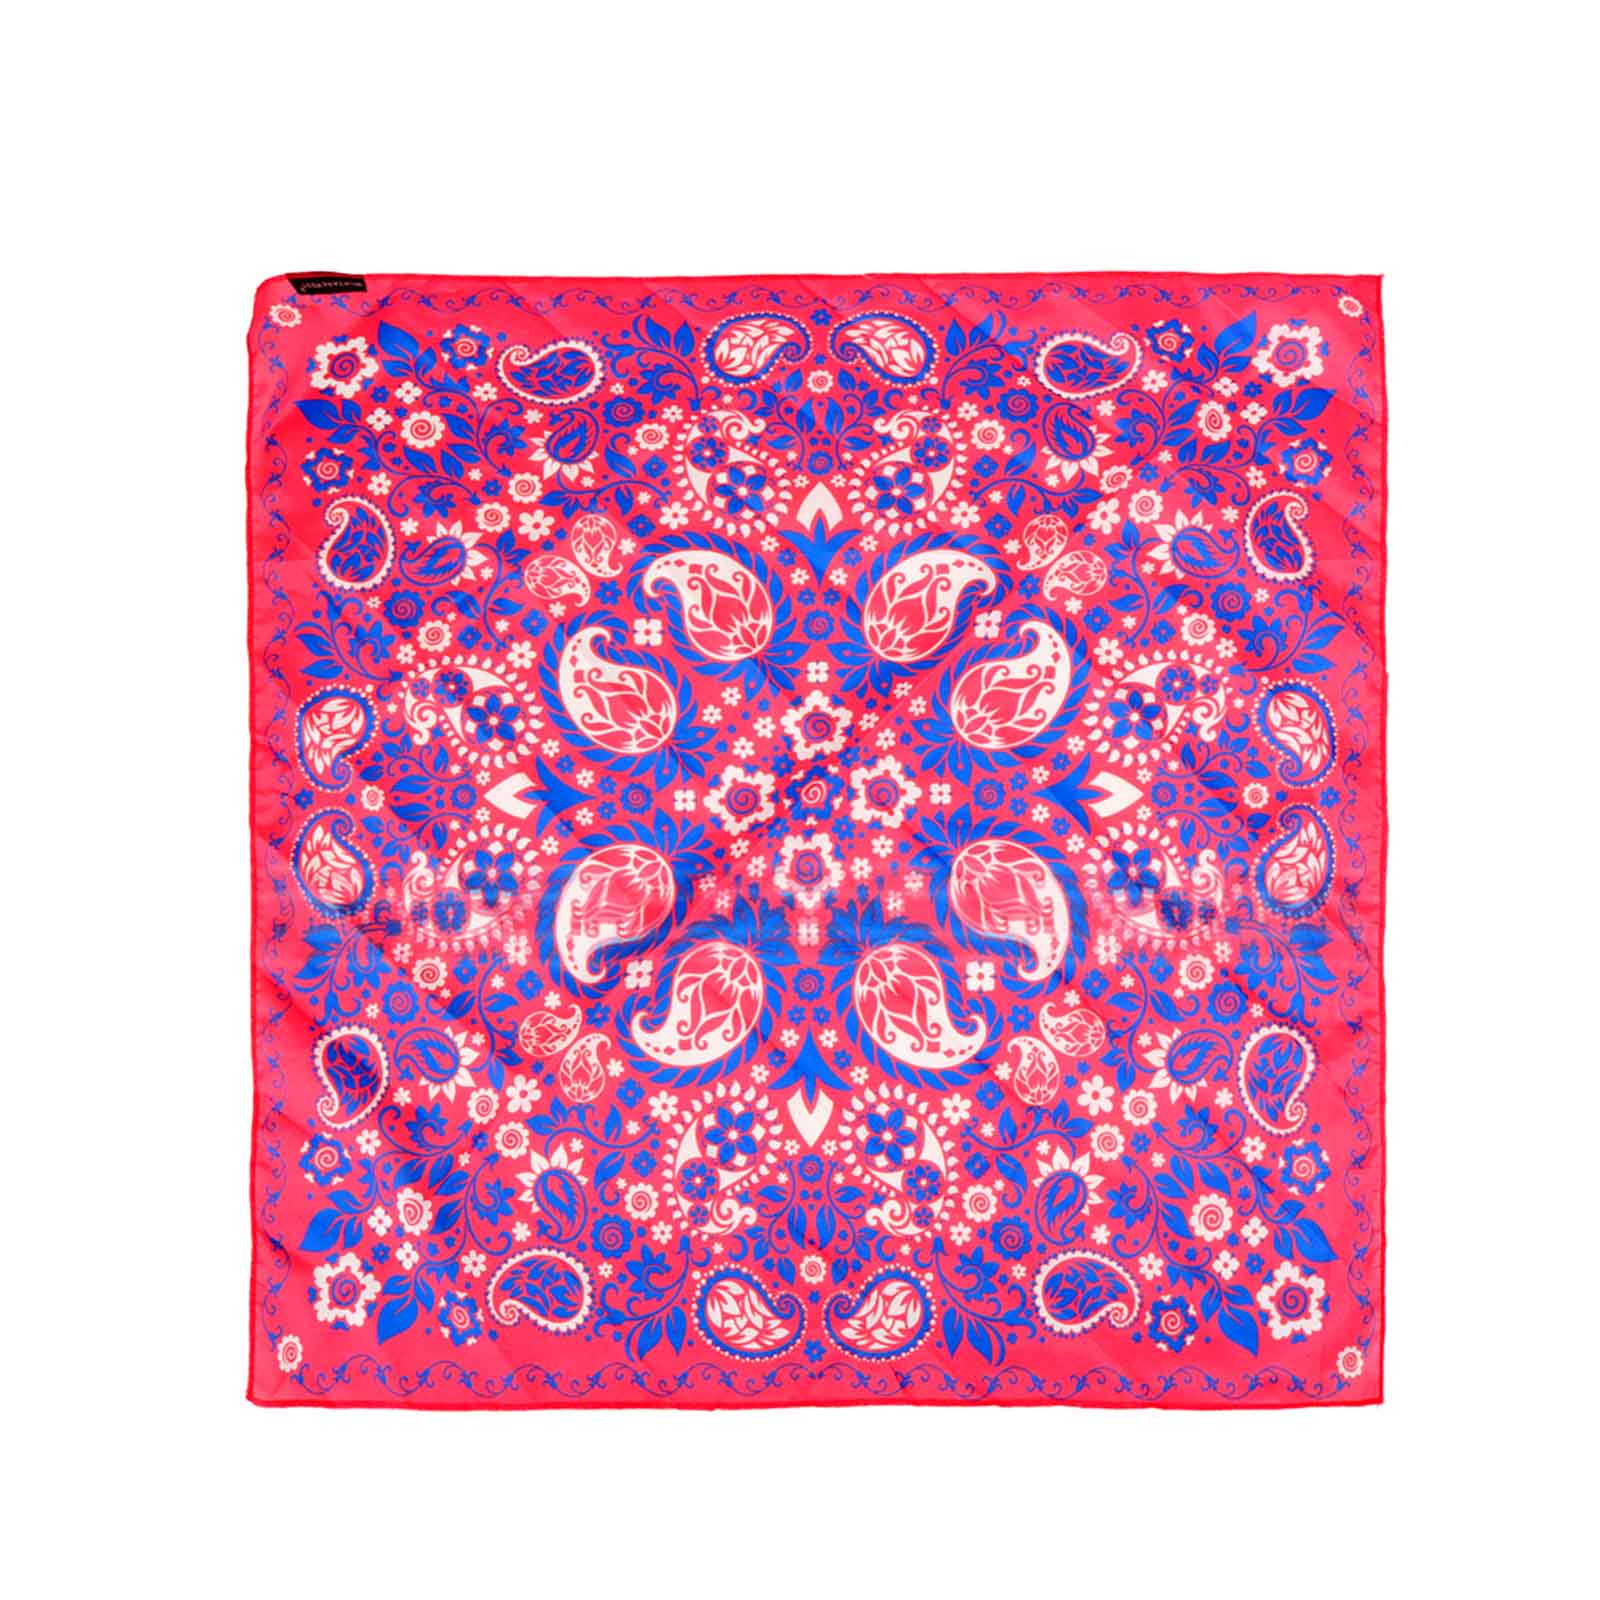 BDN08  American Bling Paisley Mandala Print Bandana - Assorted Colors (12 PCS)